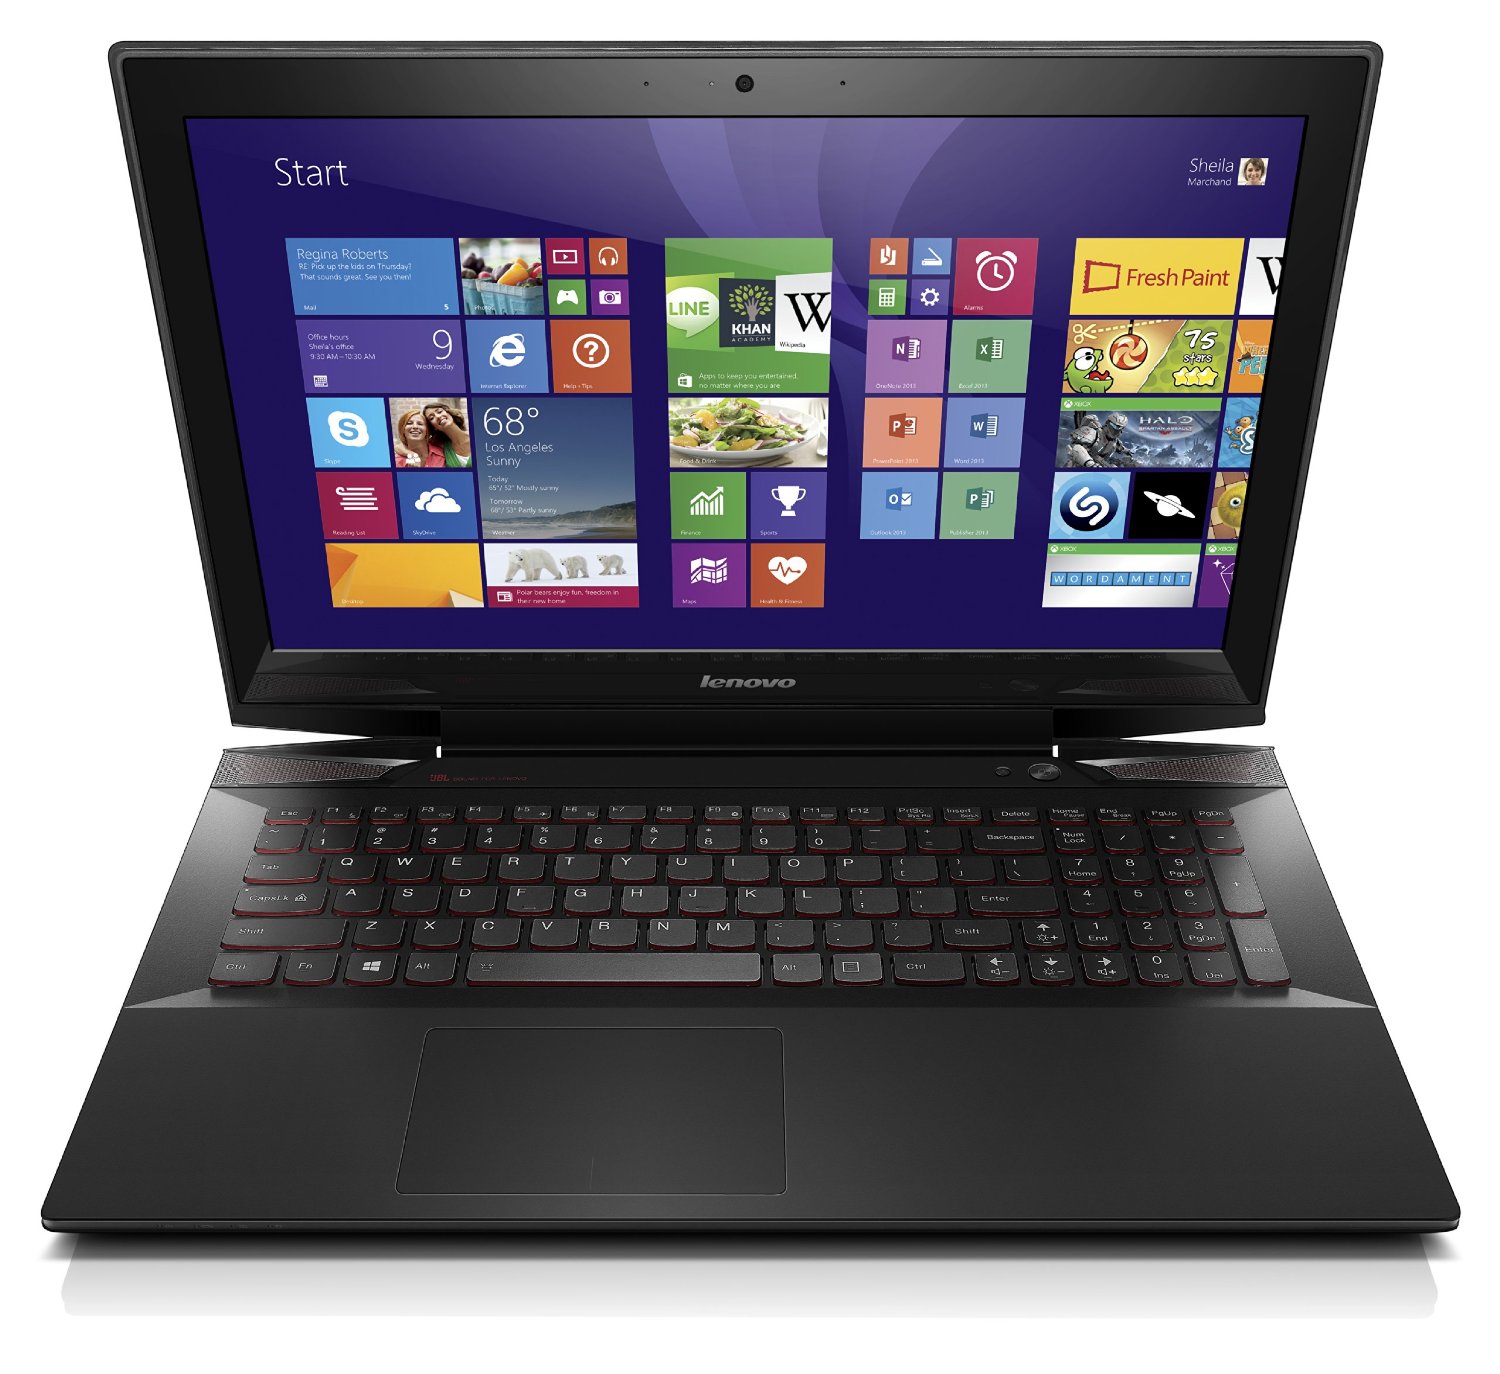 Lenovo Y50 15.6 inch Gaming Laptop (59441555)